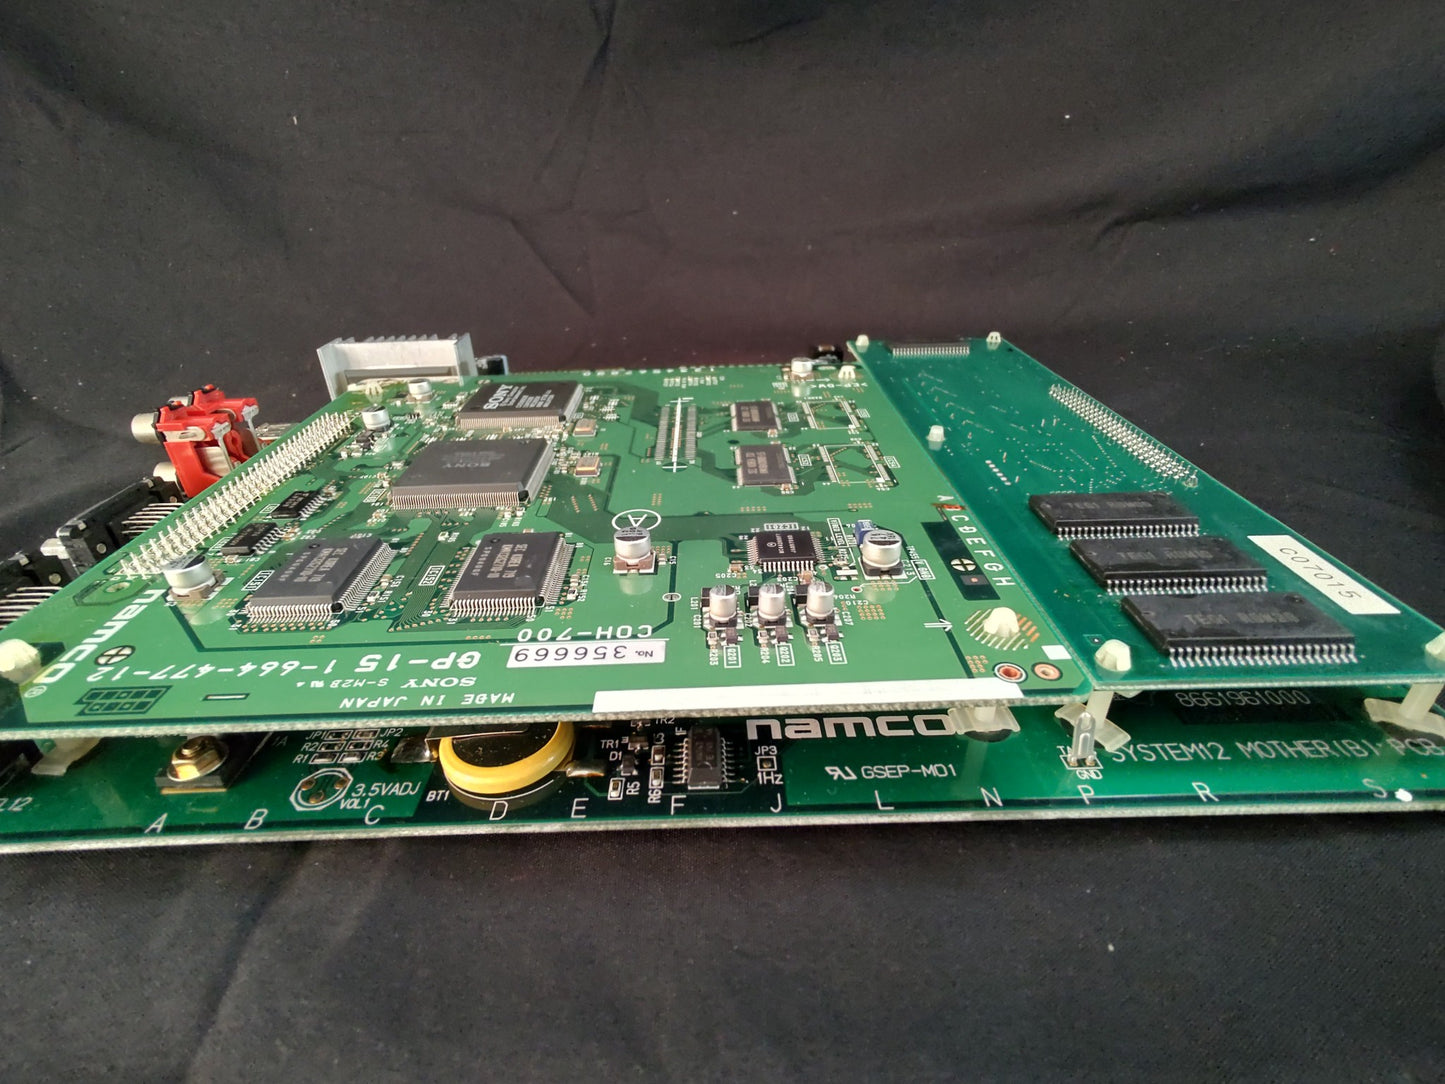 TEKKEN TAG TOURNAMENT NAMCO Arcade PCB System JAMMA Board, Working-f0803-